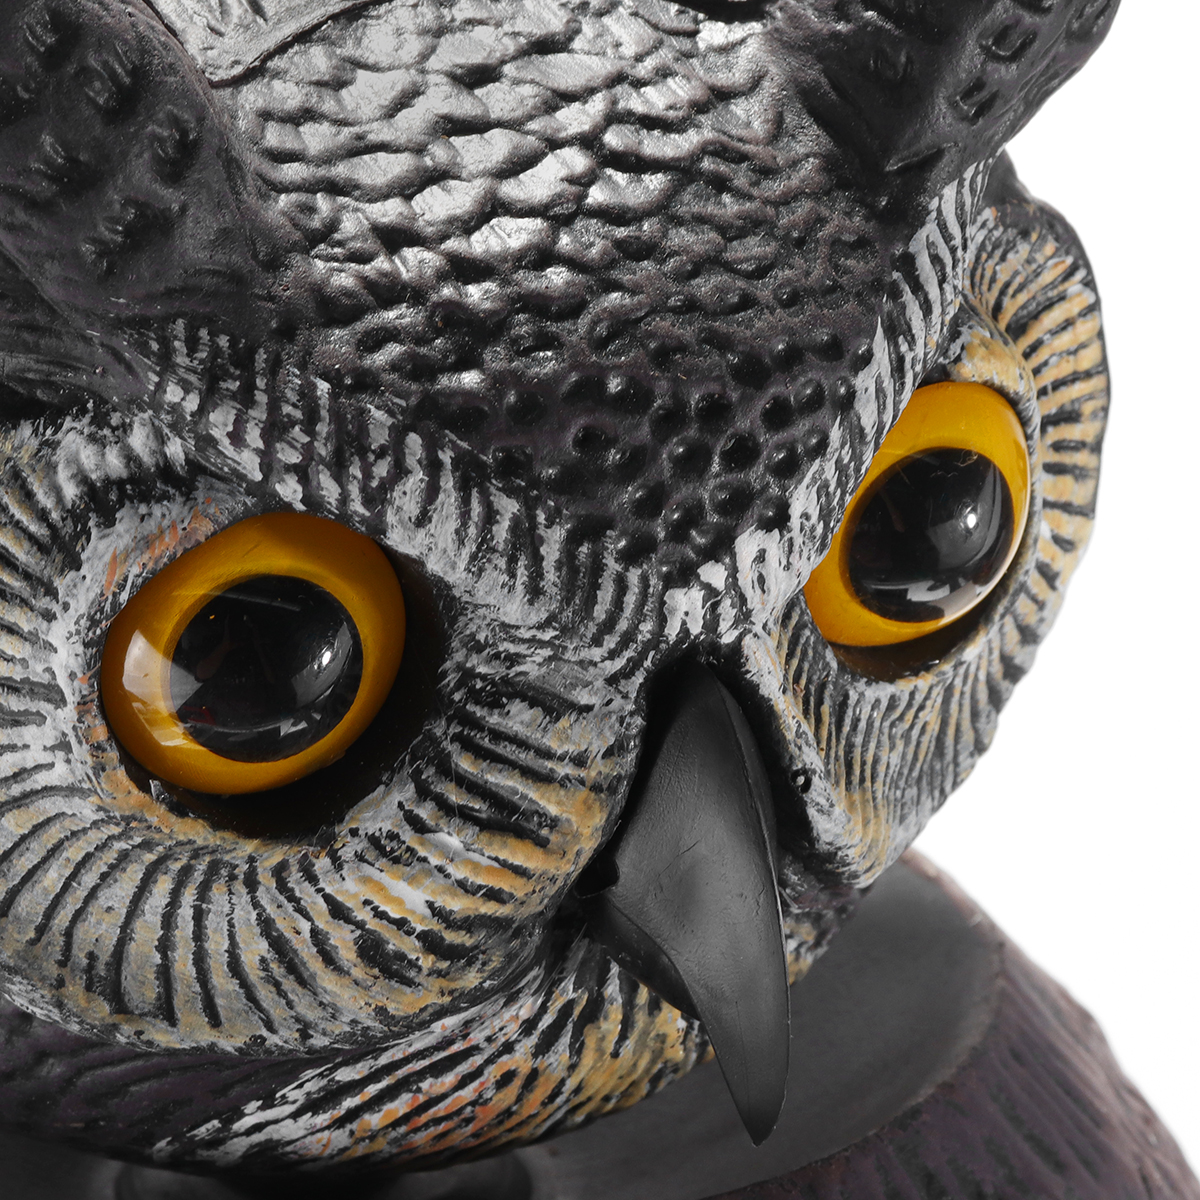 Rotating-Head-Owl-Decoy-Protection-Repellent-Bird-Pest-Control-Scarecrow-Garden-Yard-Decorations-1461479-7